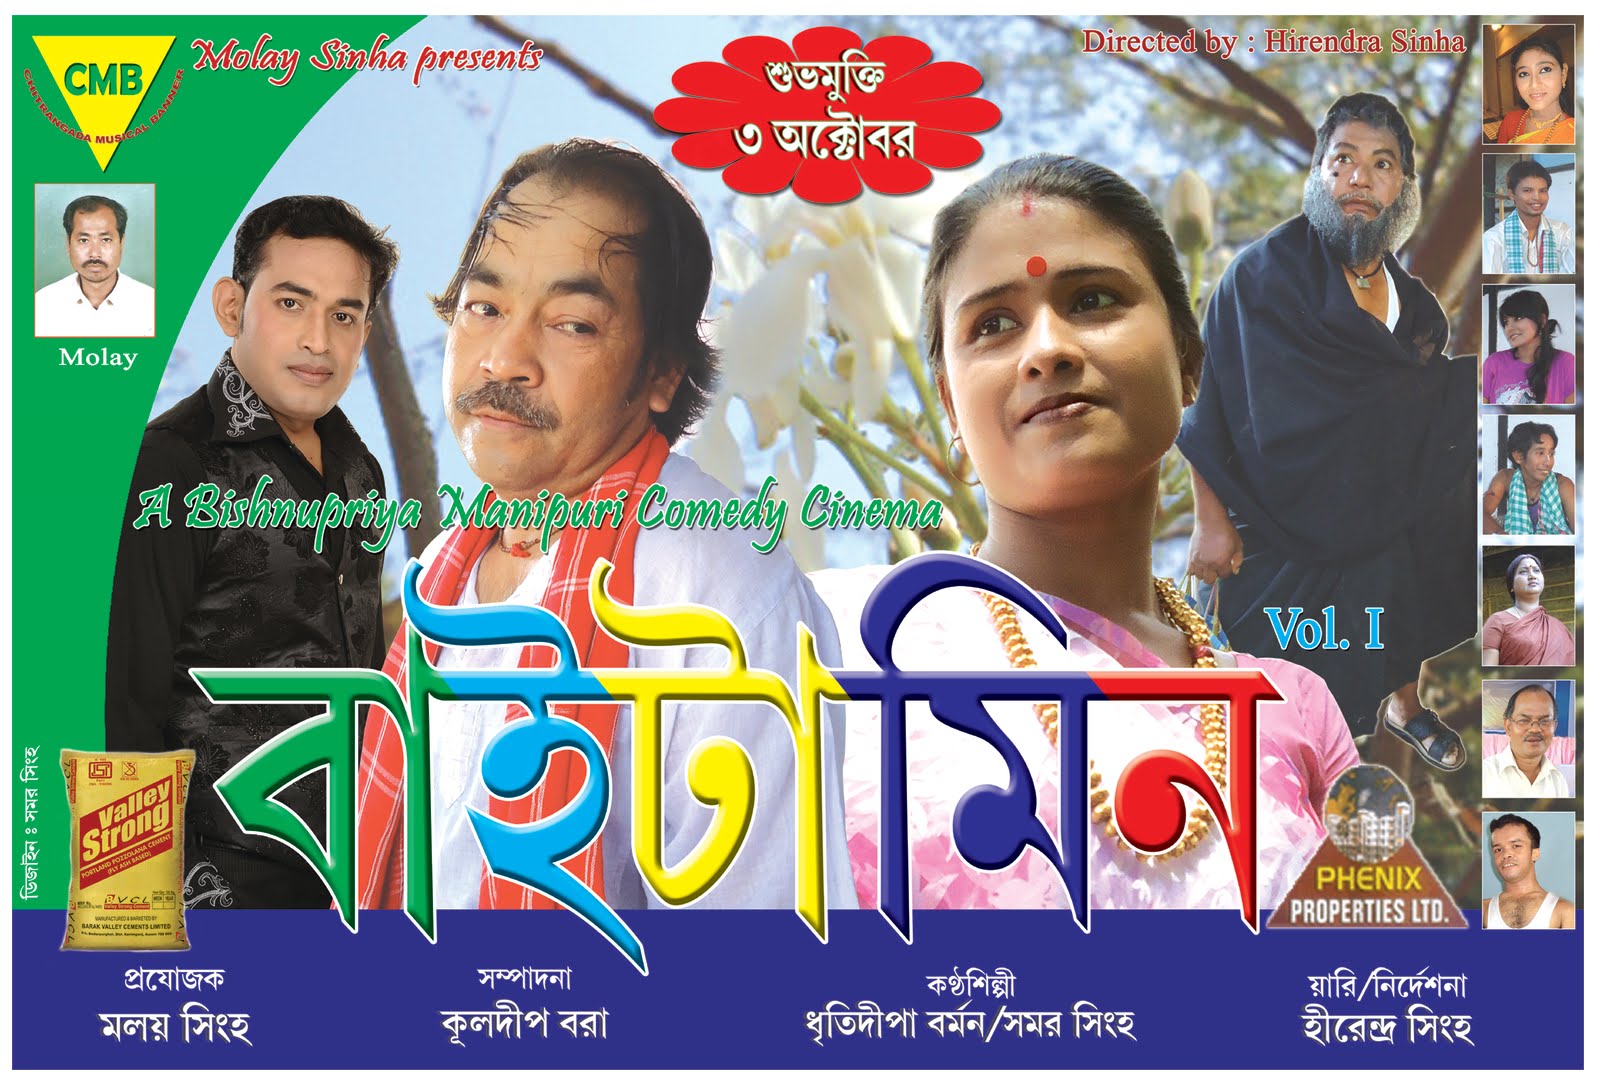 BAITAAMIN” – Bishnupriya Manipuri Comedy Film releasing on 3rd October, 2010